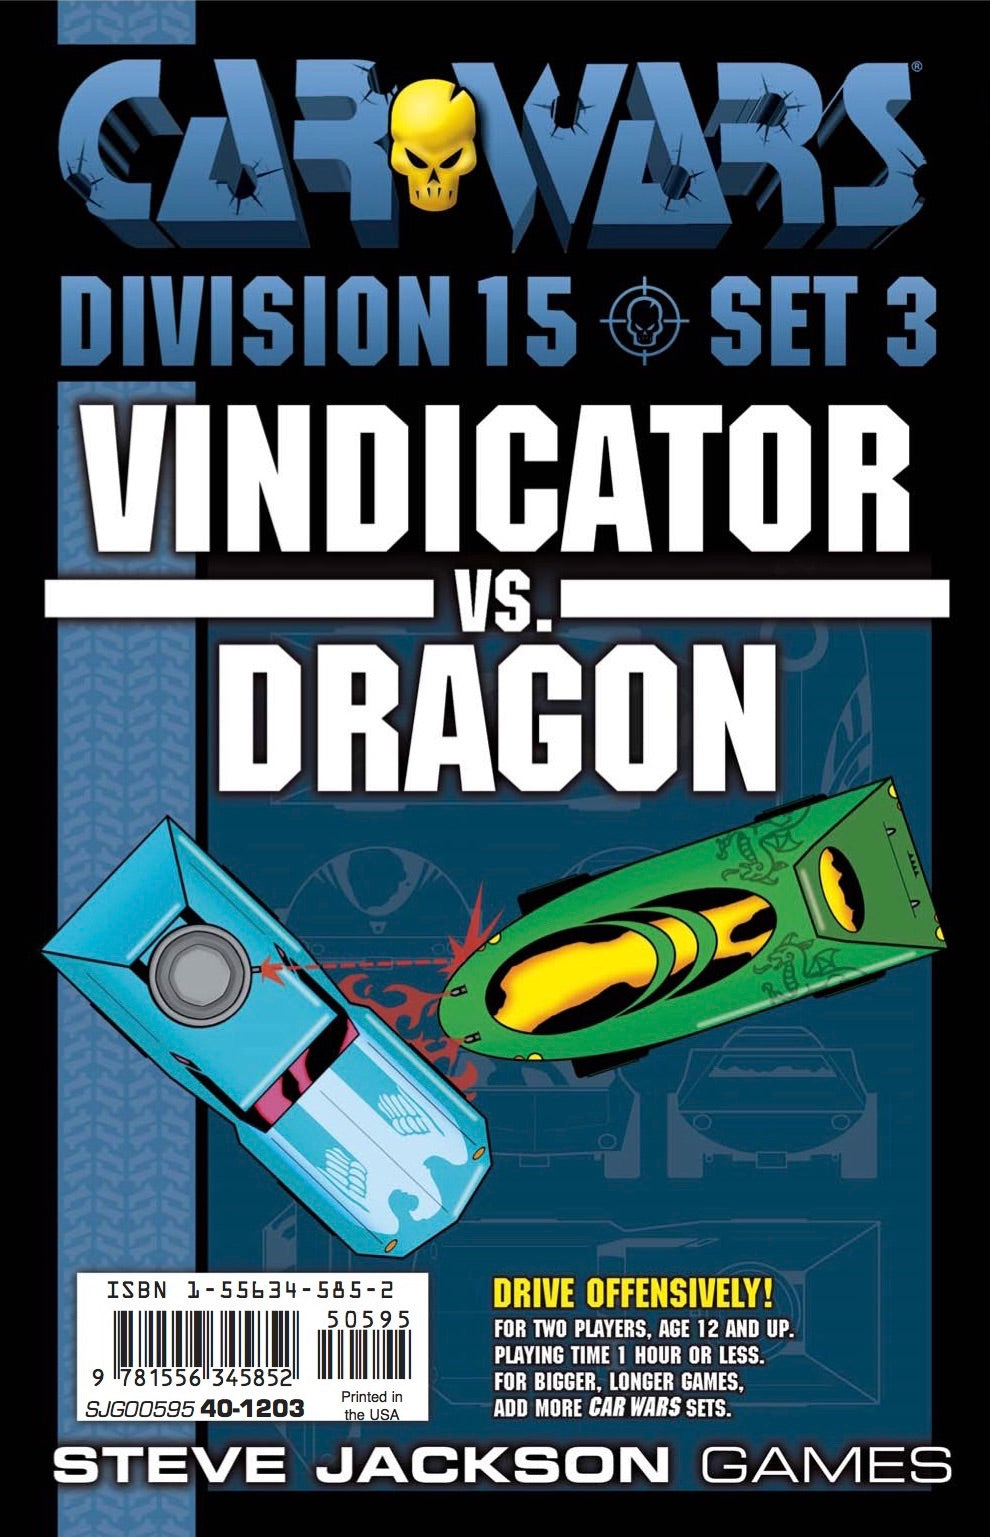 Car Wars Division 15 Set 3 - Vindicator vs. Dragon